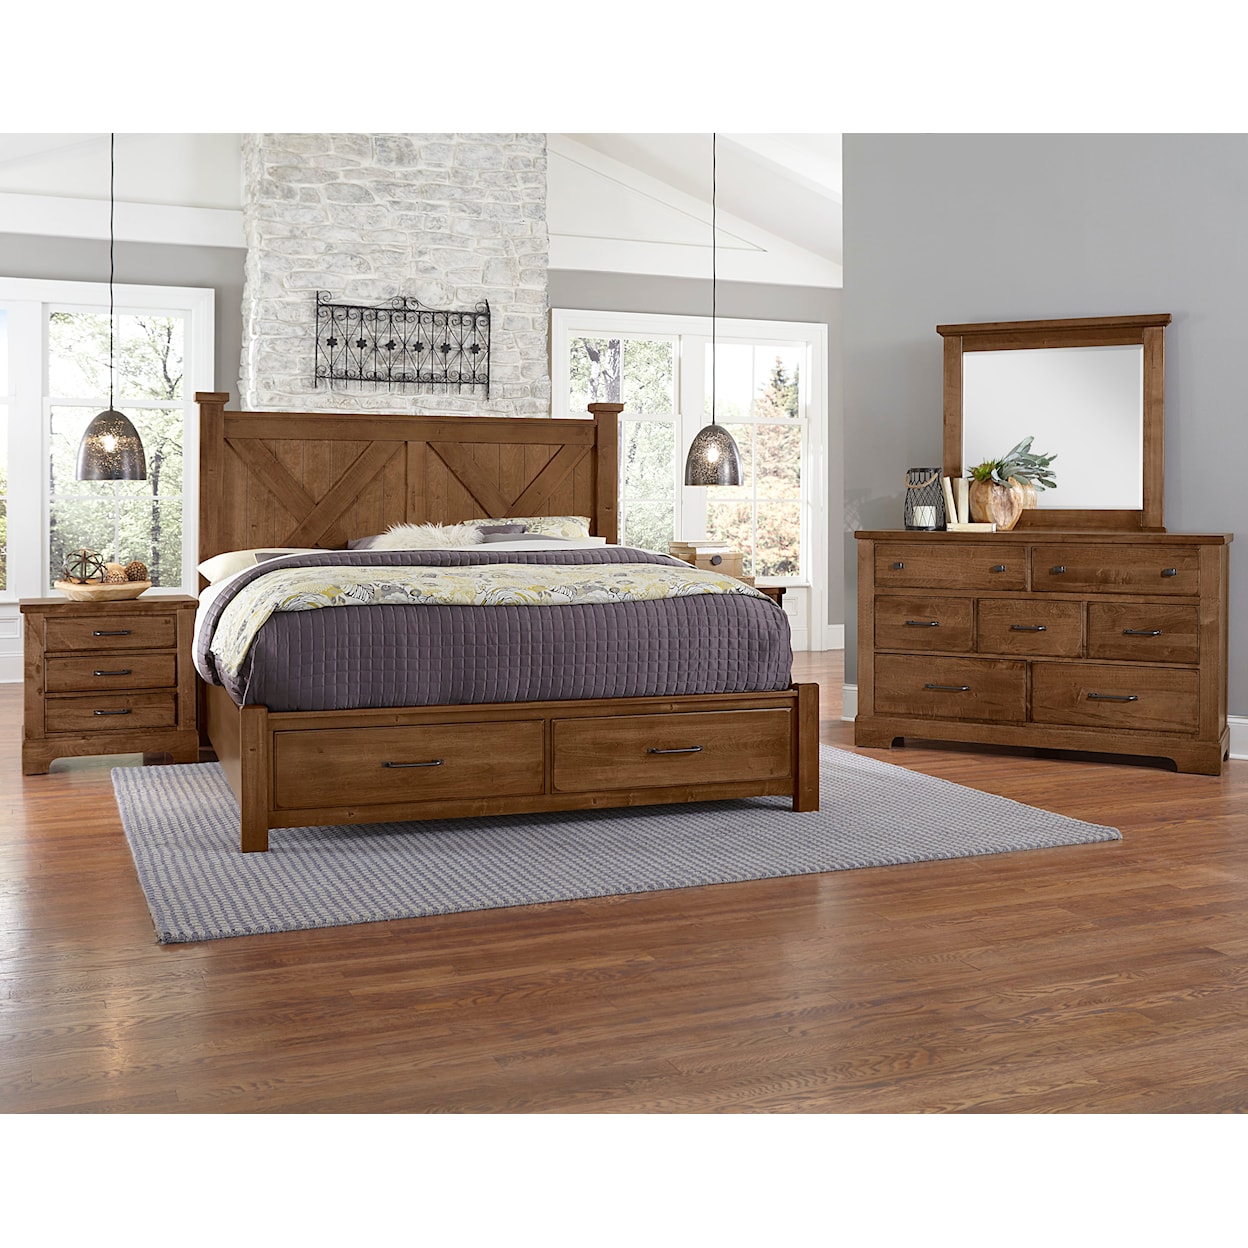 Artisan & Post Cool Rustic King Storage Bed